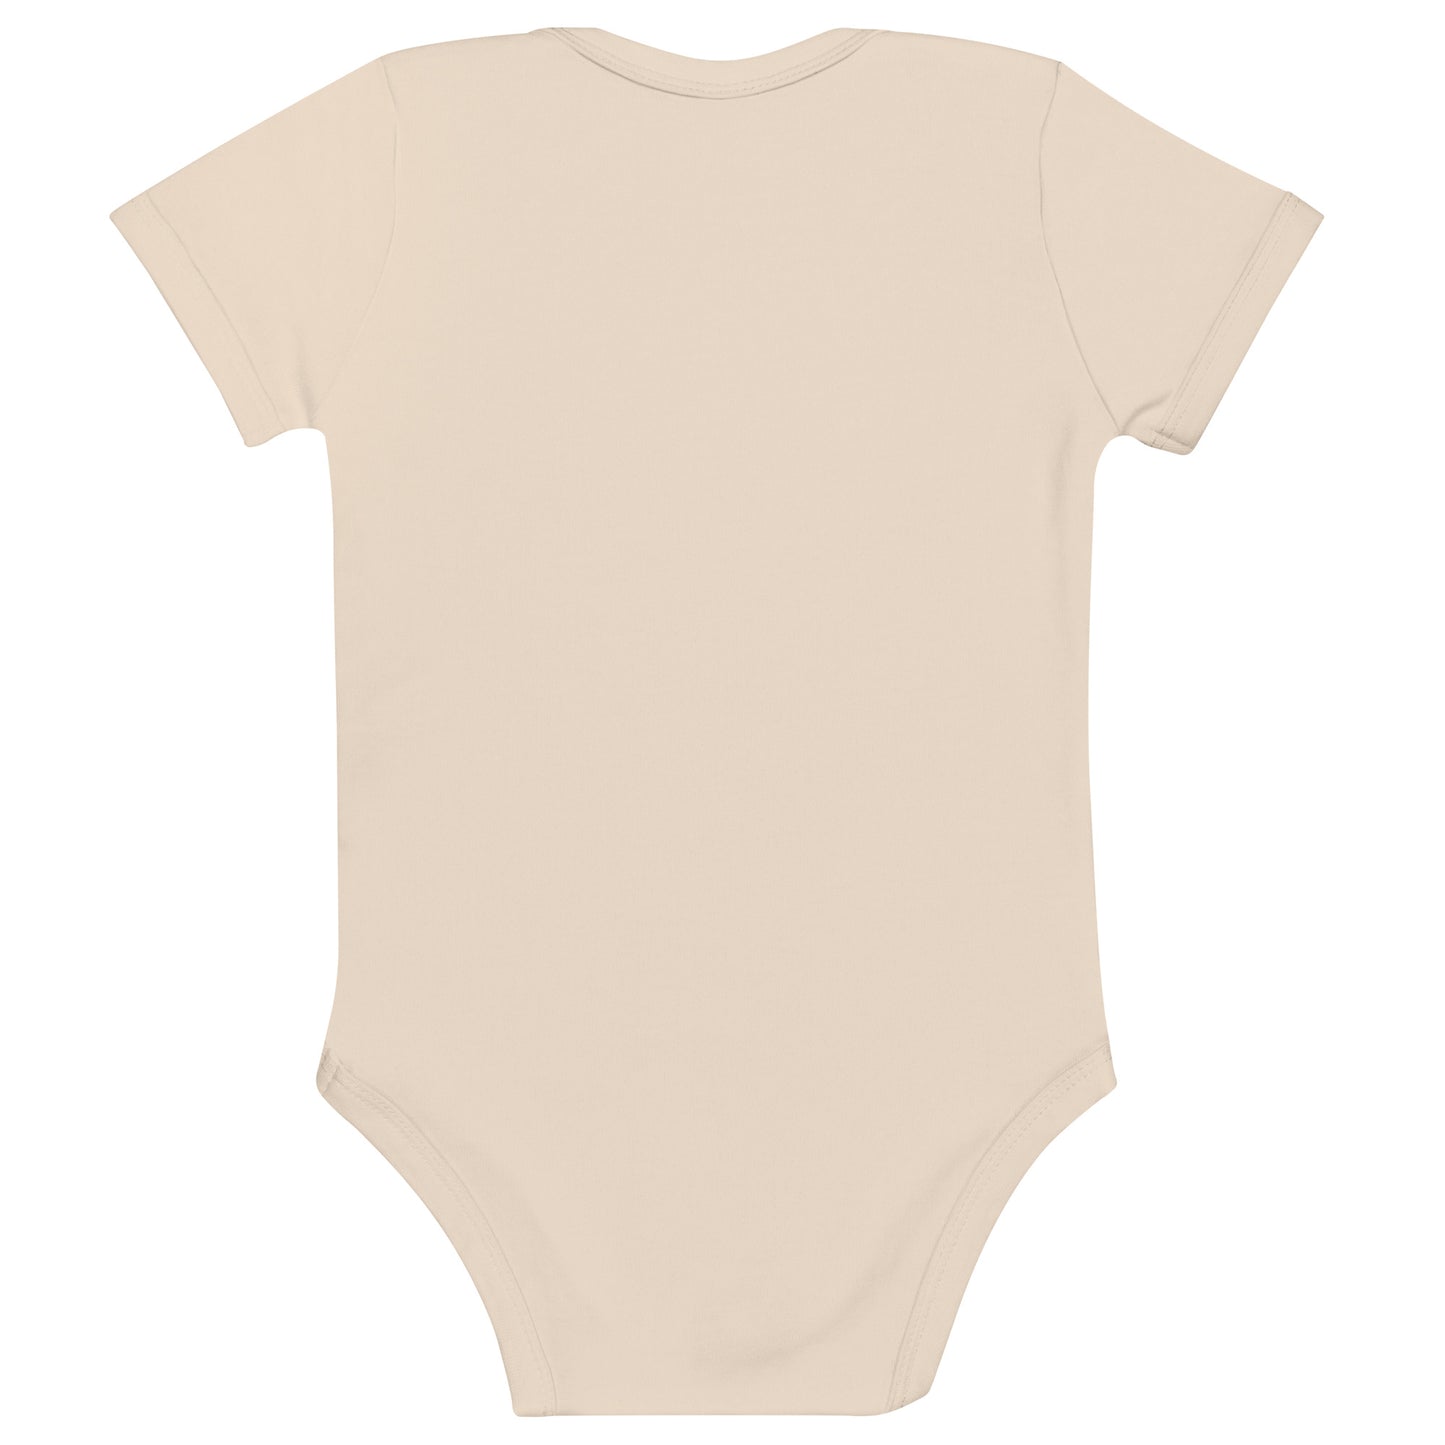 Organic cotton baby bodysuit | matcha latte, hm? W